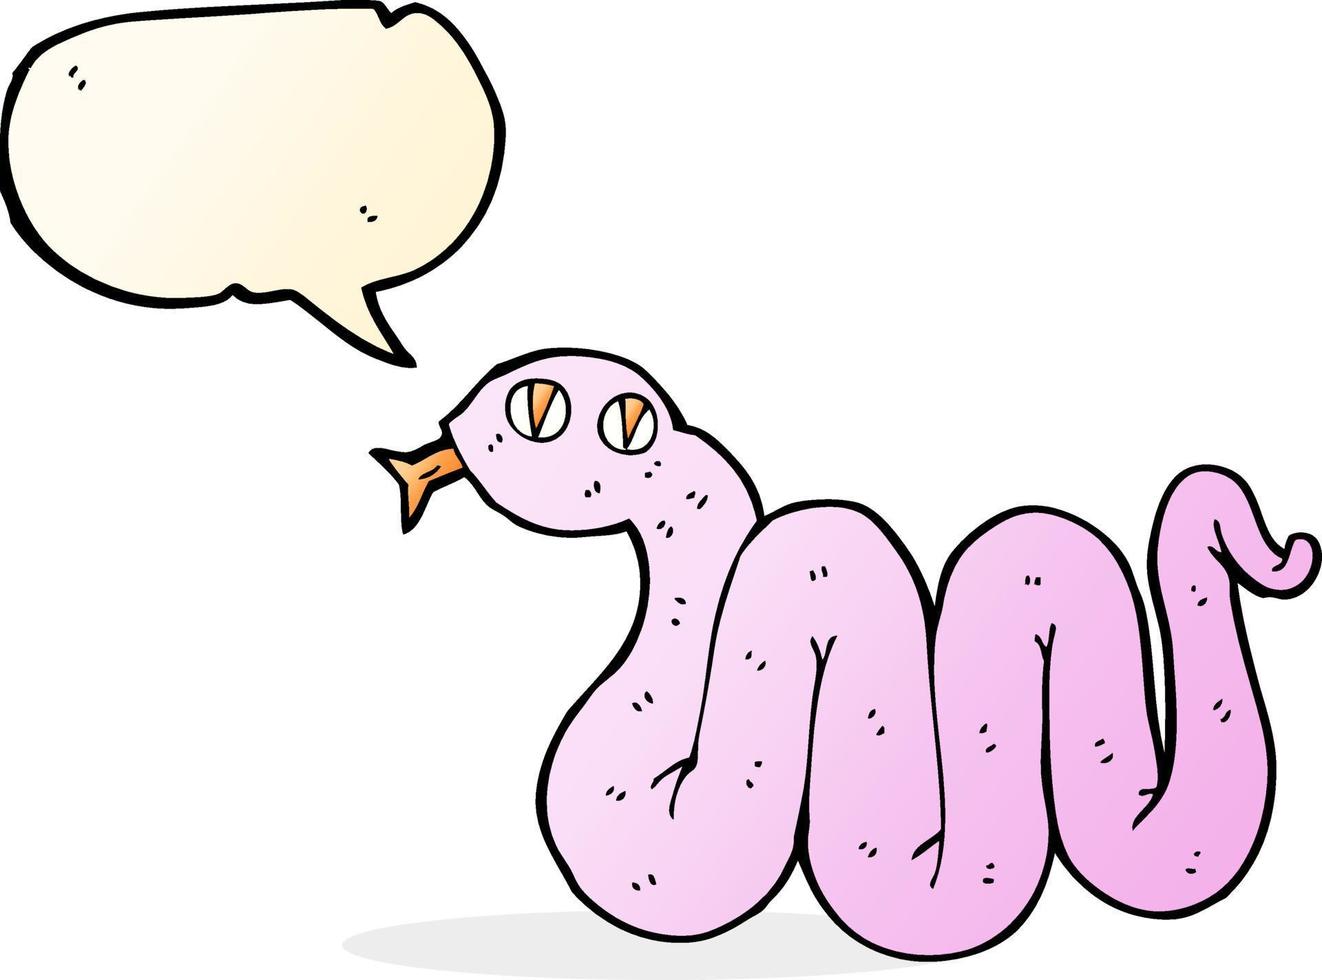 funny cartoon snake with speech bubble vector